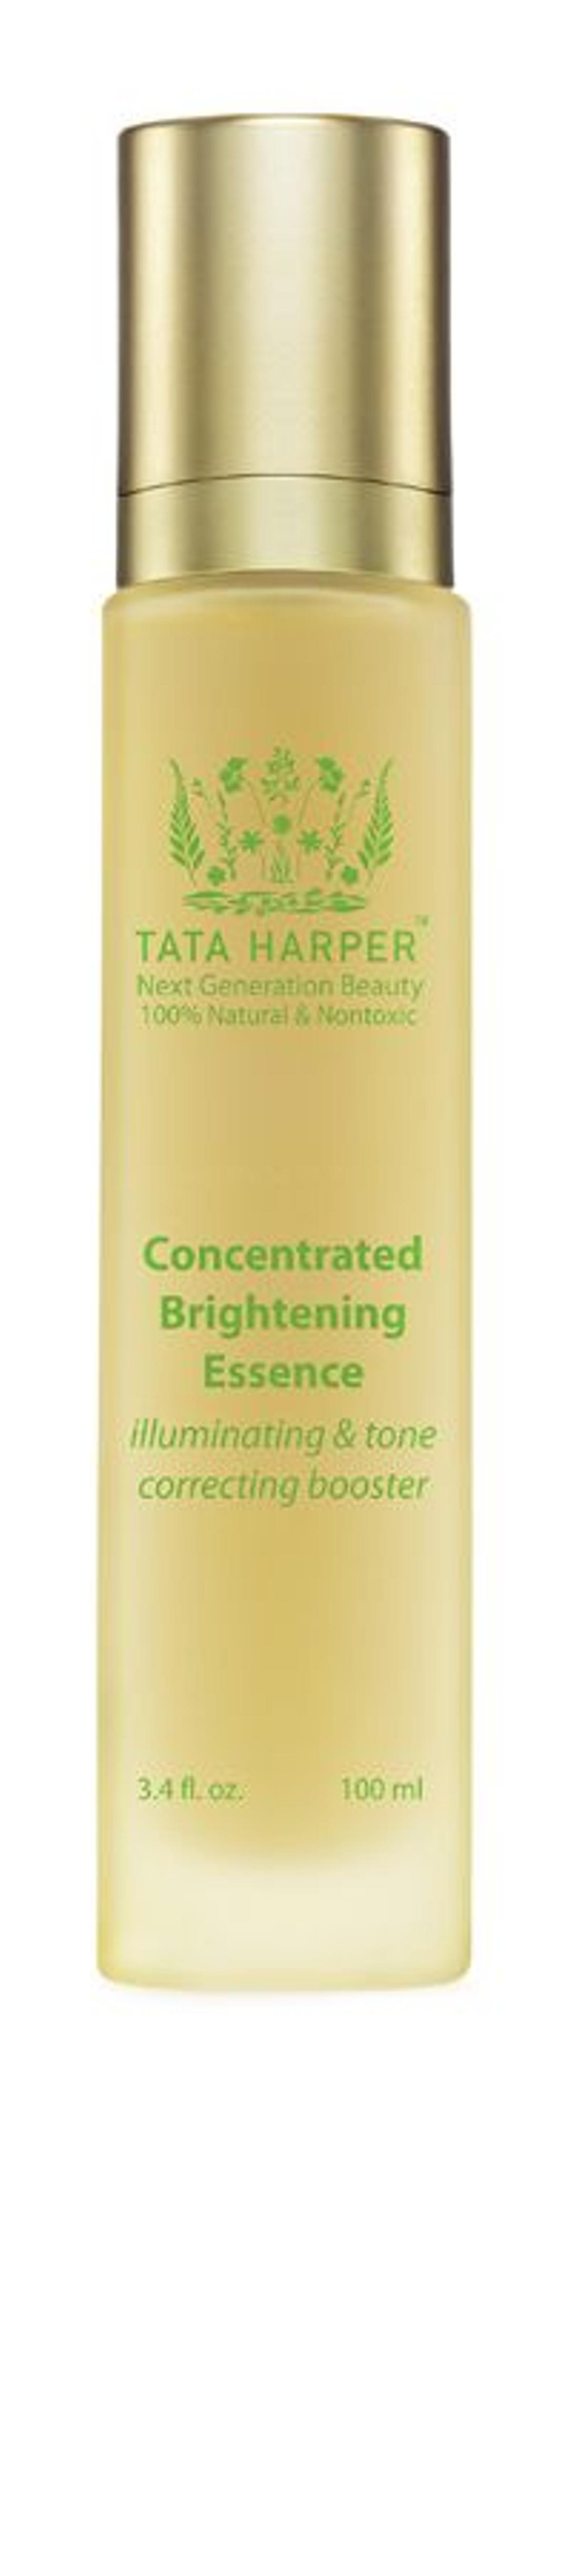 Concentrated Brightening Essence, de Tata Harper